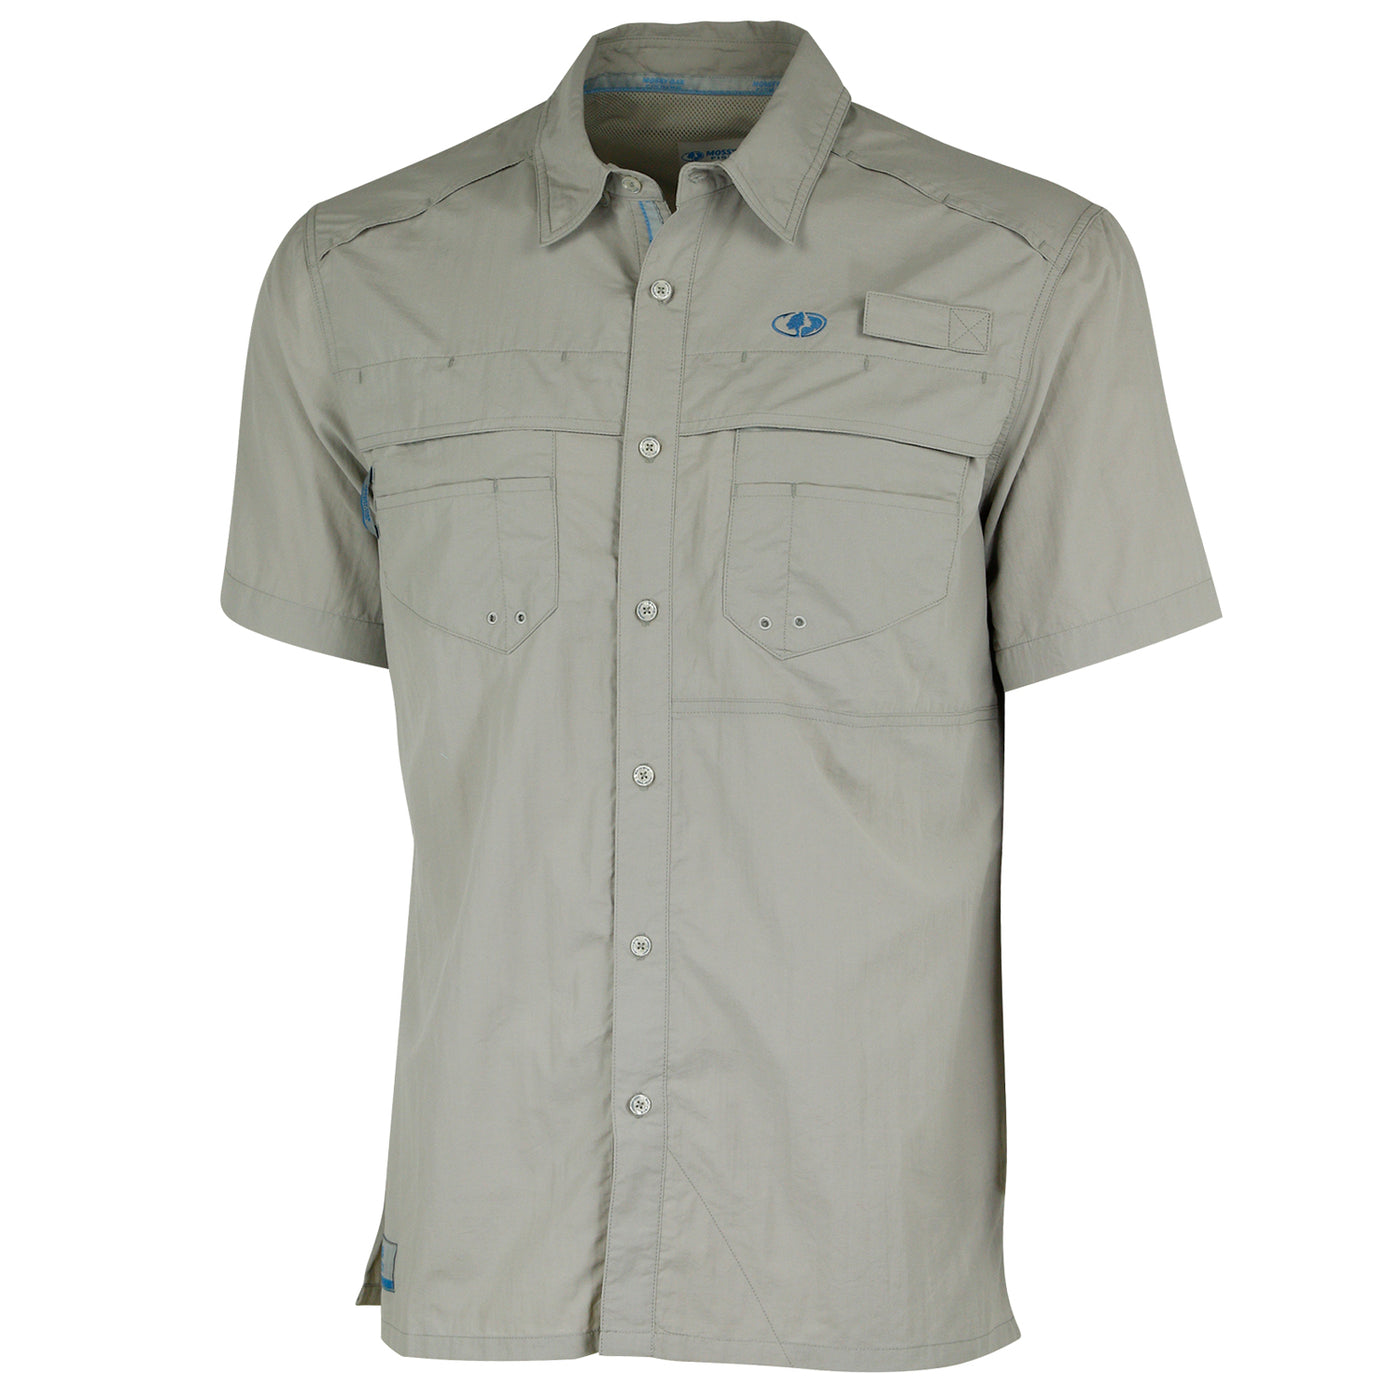 Mossy Oak Men's Short Sleeve Fishing Shirt